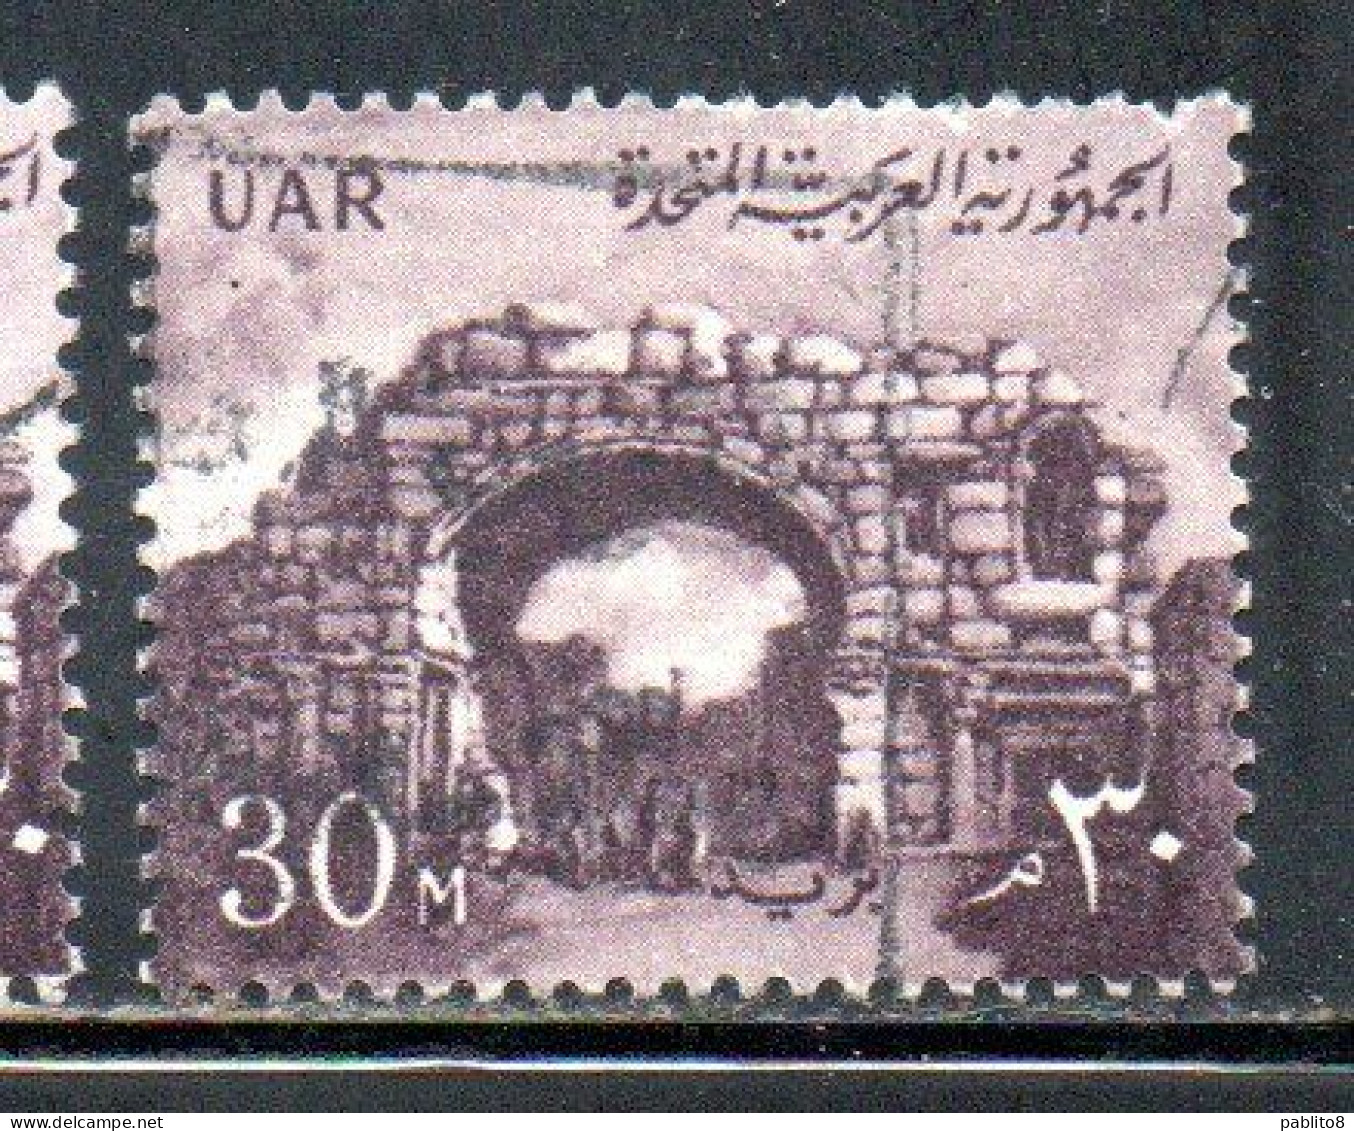 UAR EGYPT EGITTO 1959 1960 ST. SIMON'S GATE BOSRA SYRIA  30m USED USATO OBLITERE' - Used Stamps